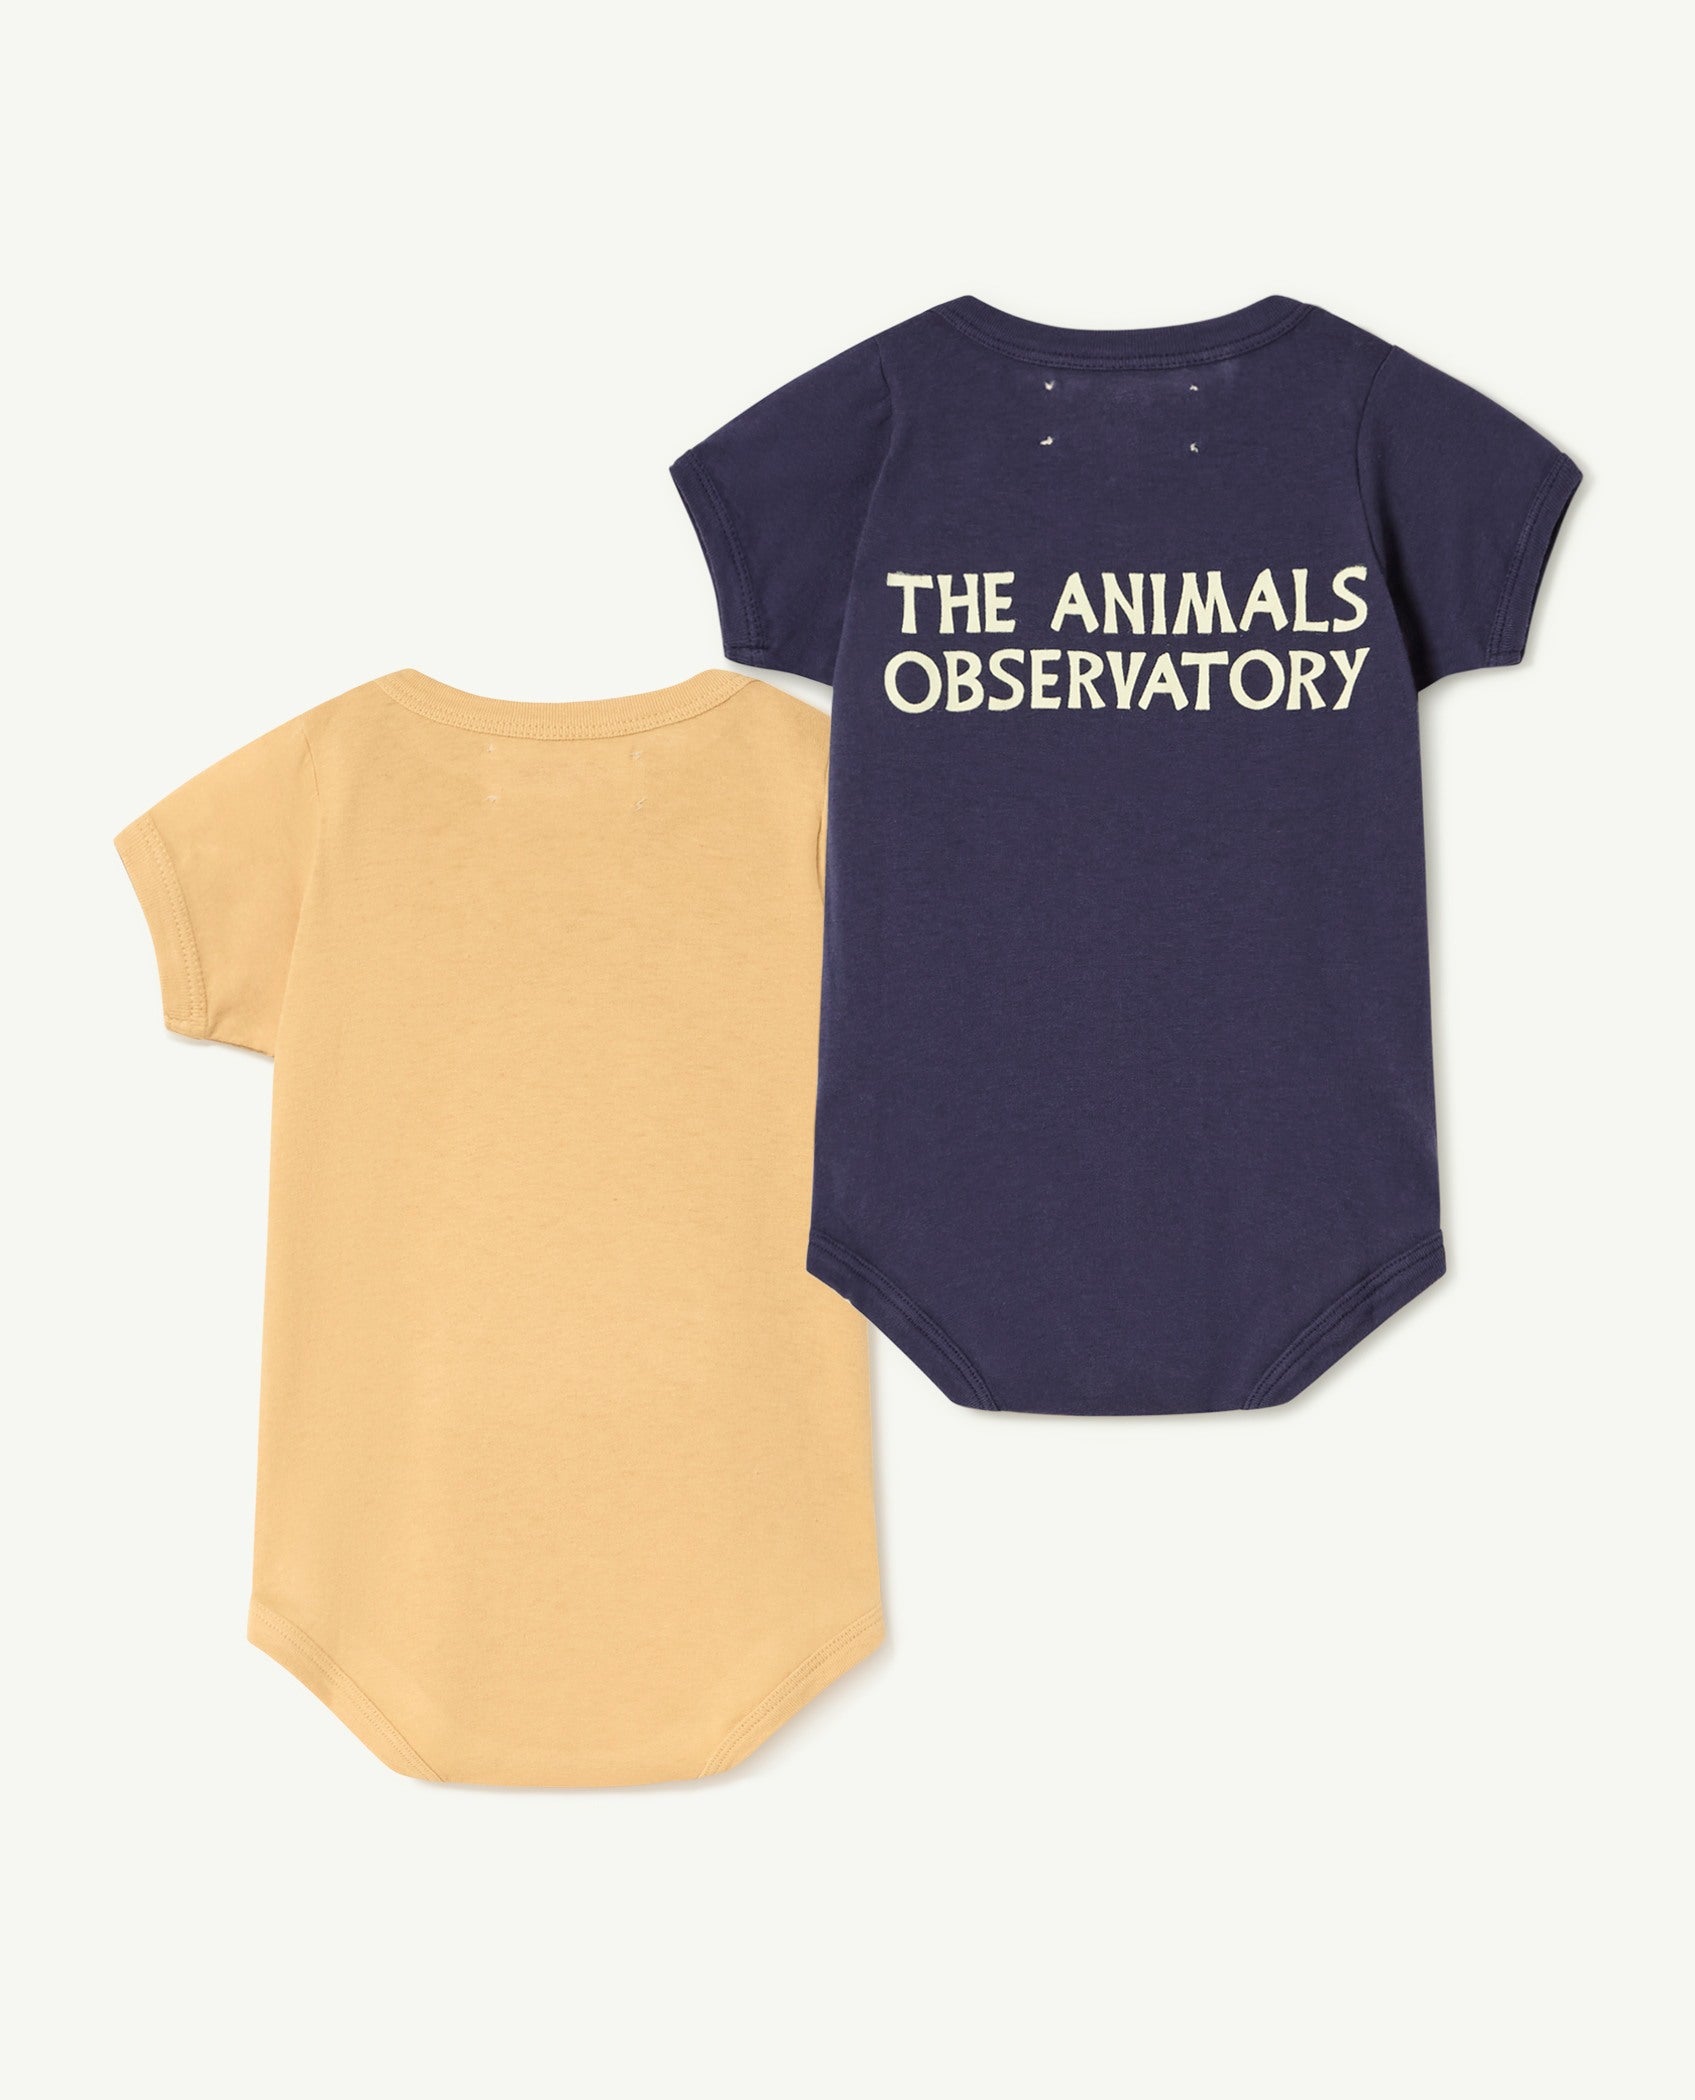 The Animals Observatory Pack Chimpanzee Baby Bodysuit Set - Tan/Navy